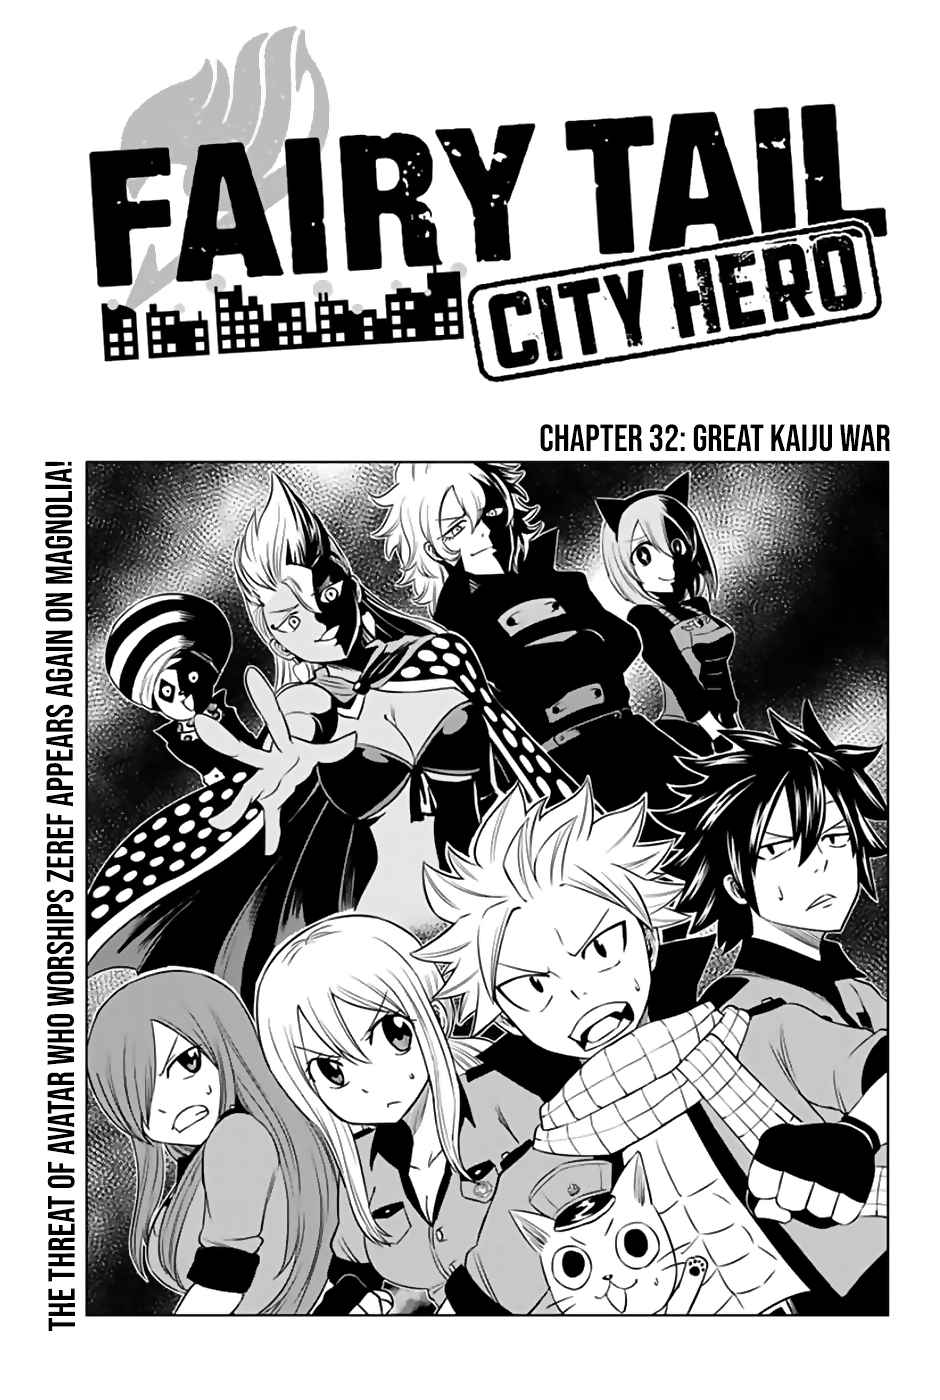 Fairy Tail: City Hero Ch. 32 Great Kaiju War